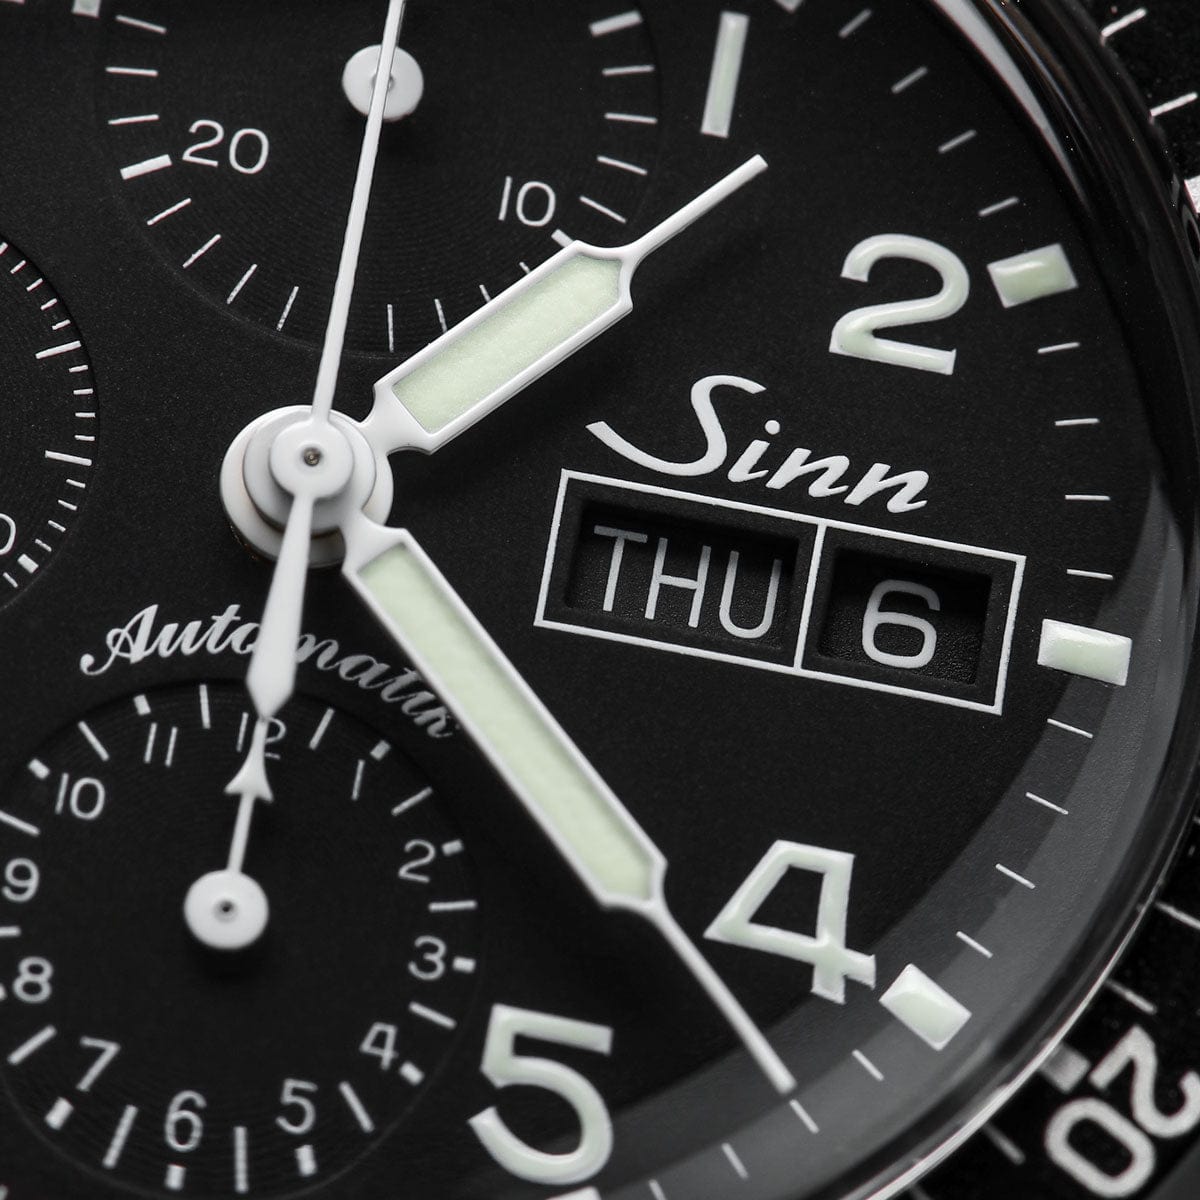 Sinn 103 St Pilot Chronograph Automatic Watch - Black Dial - Solid Bracelet - NEARLY NEW